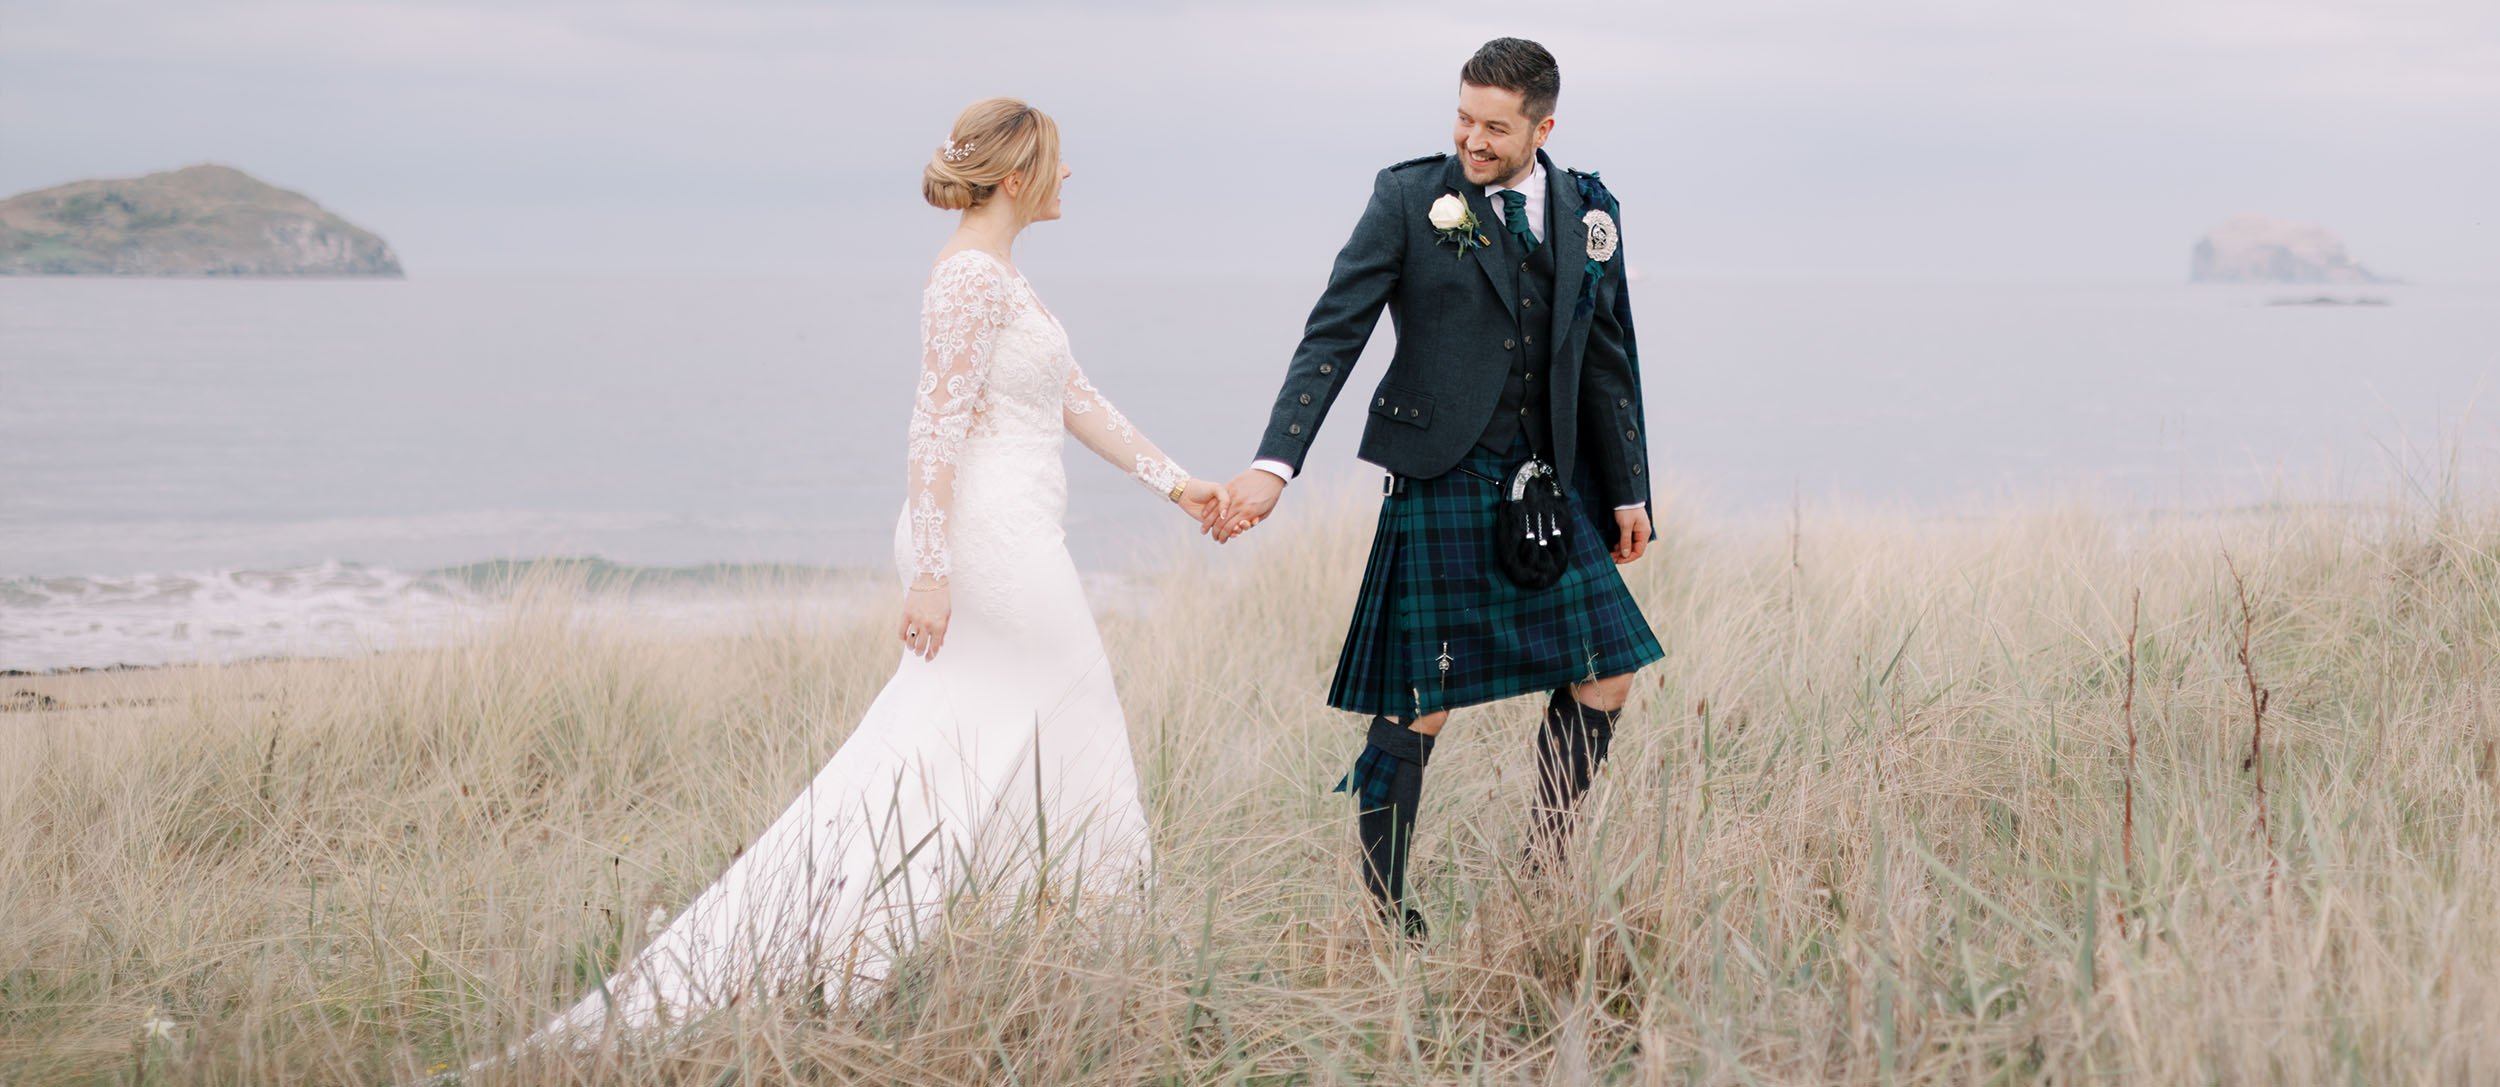 1b-fine-art-light-airy-wedding-photographer-scotland-uk.jpeg